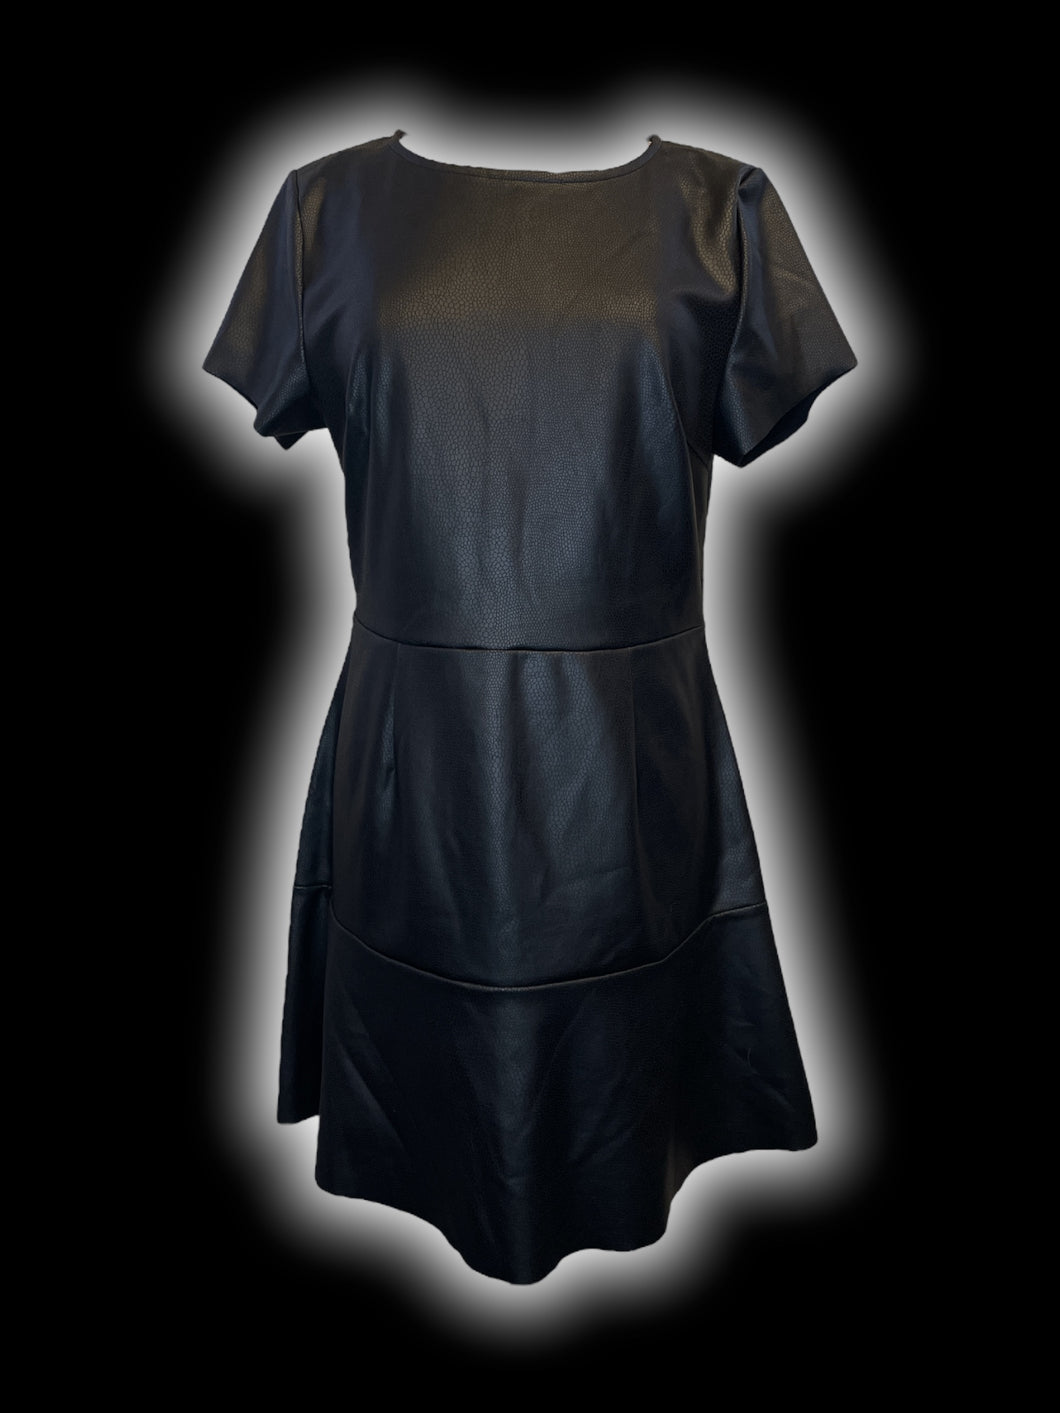 L NWT Black pleather short sleeve scoop neckline a-line dress w/ zipper closure